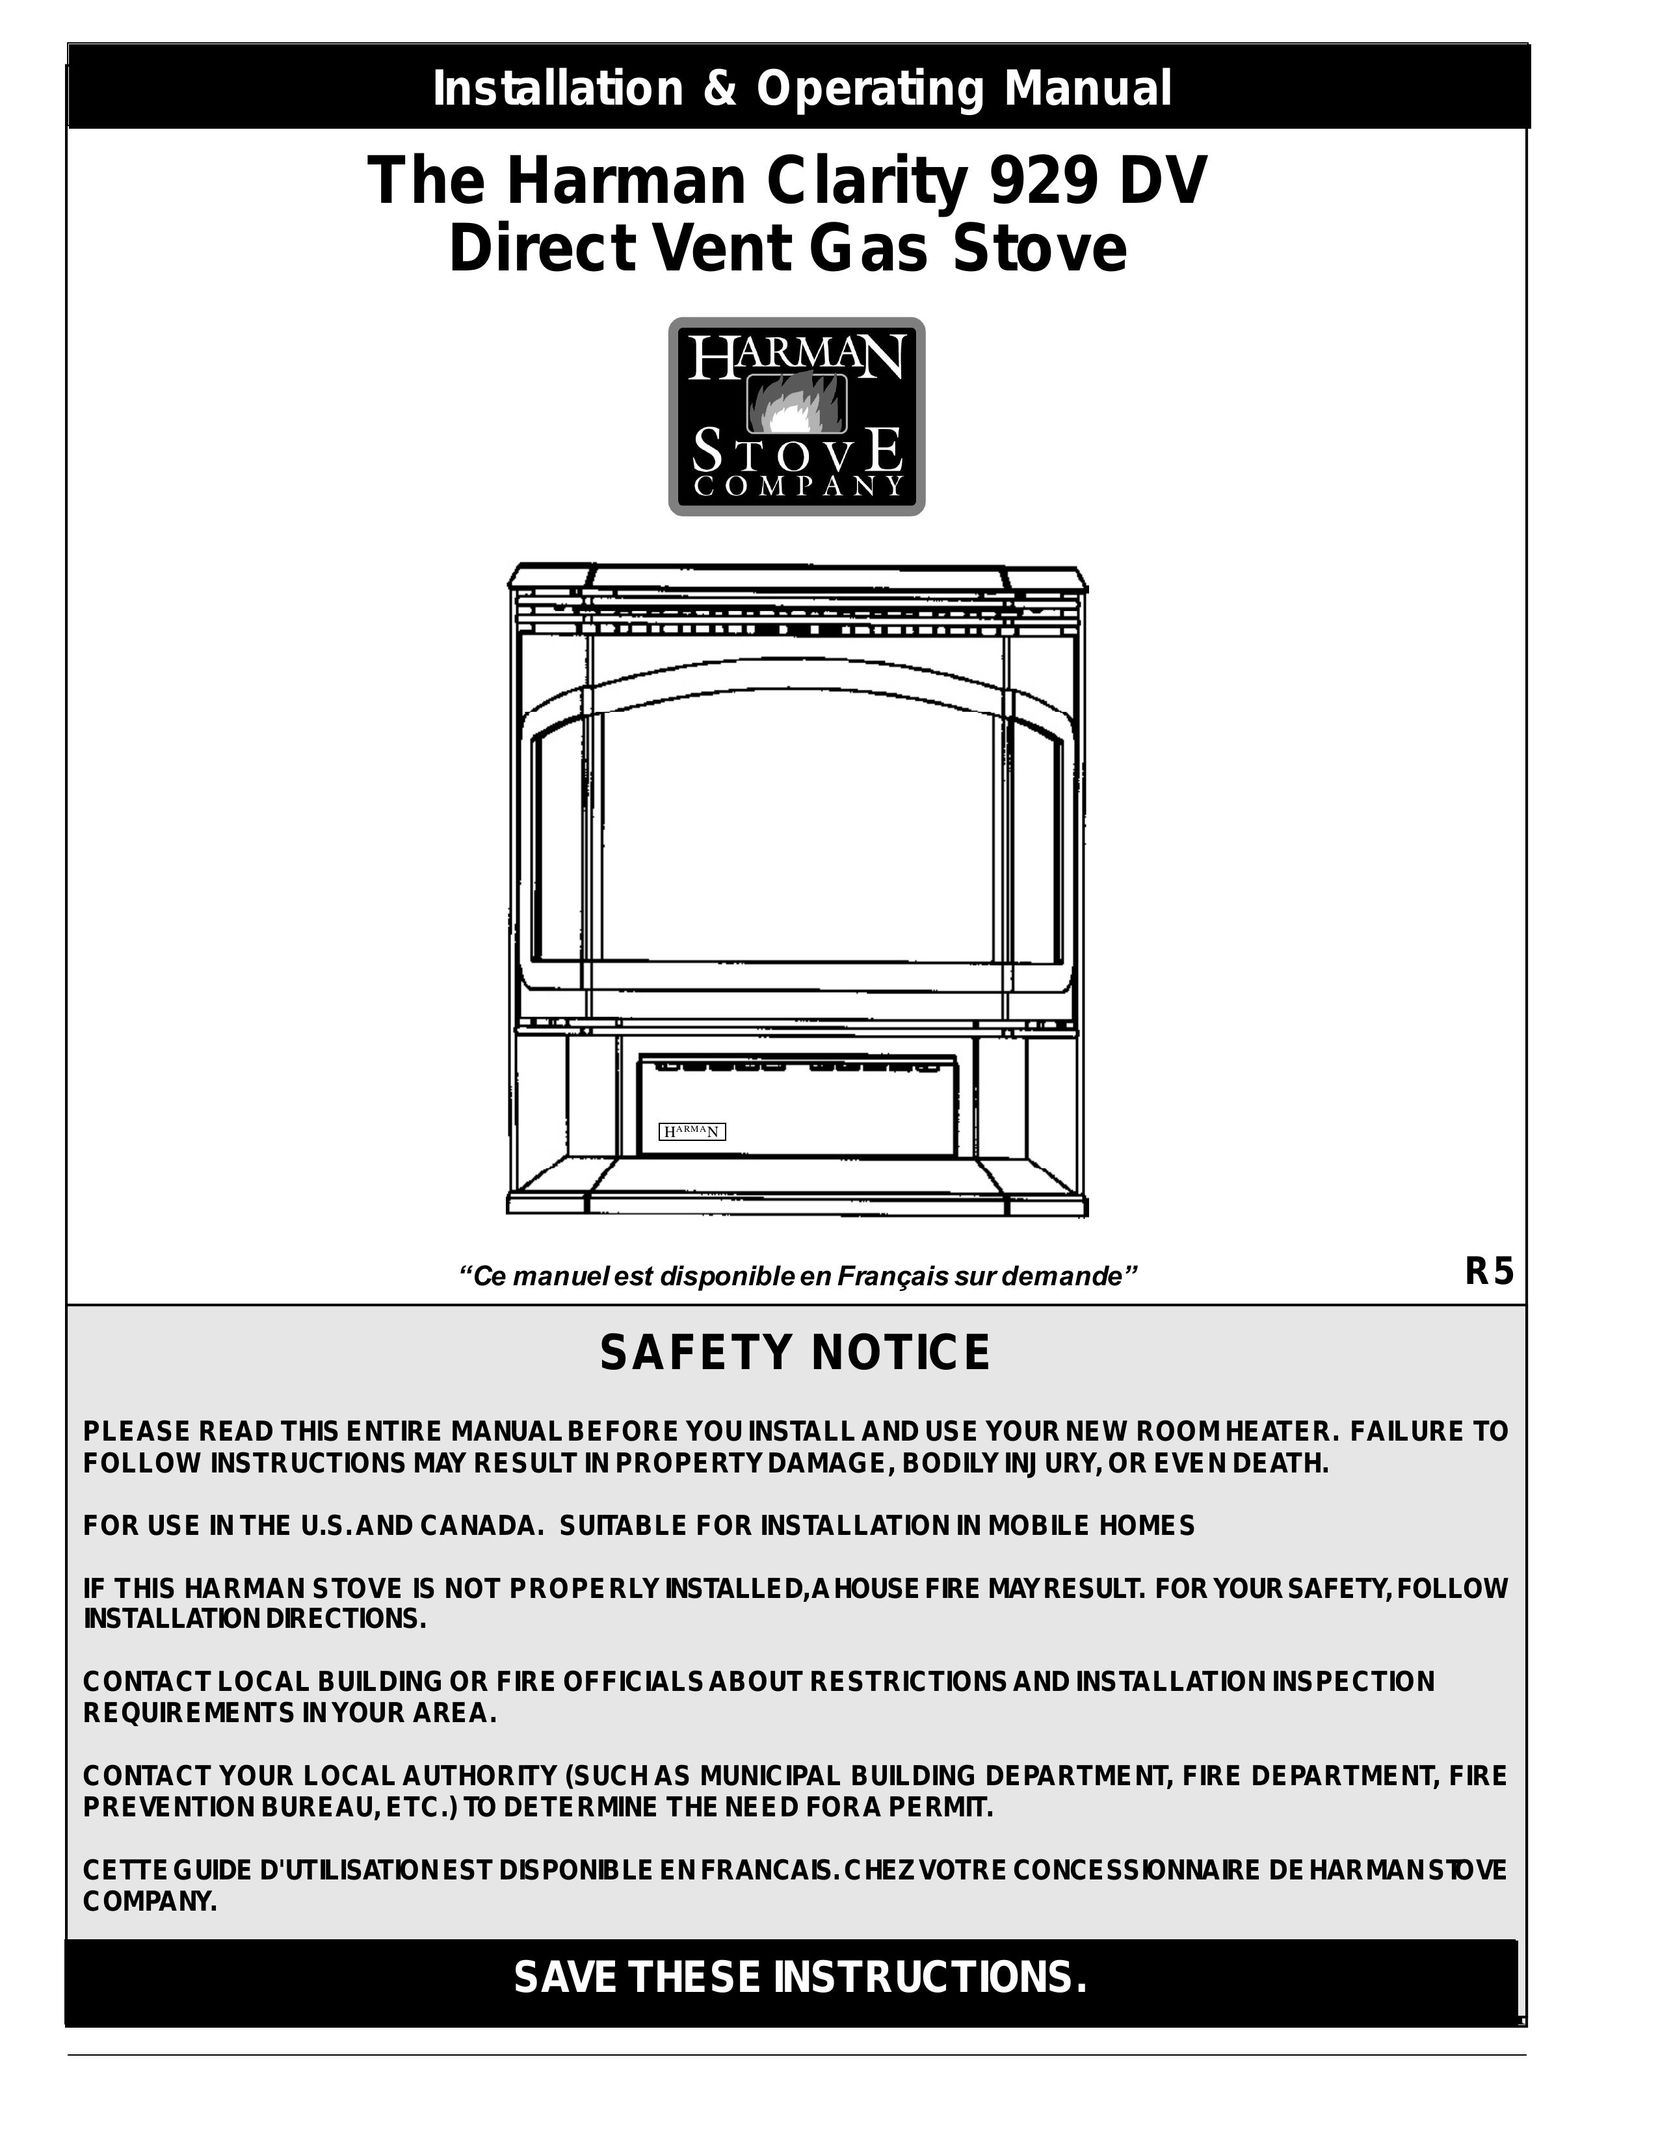 Harman Stove Company 929 DV Stove User Manual